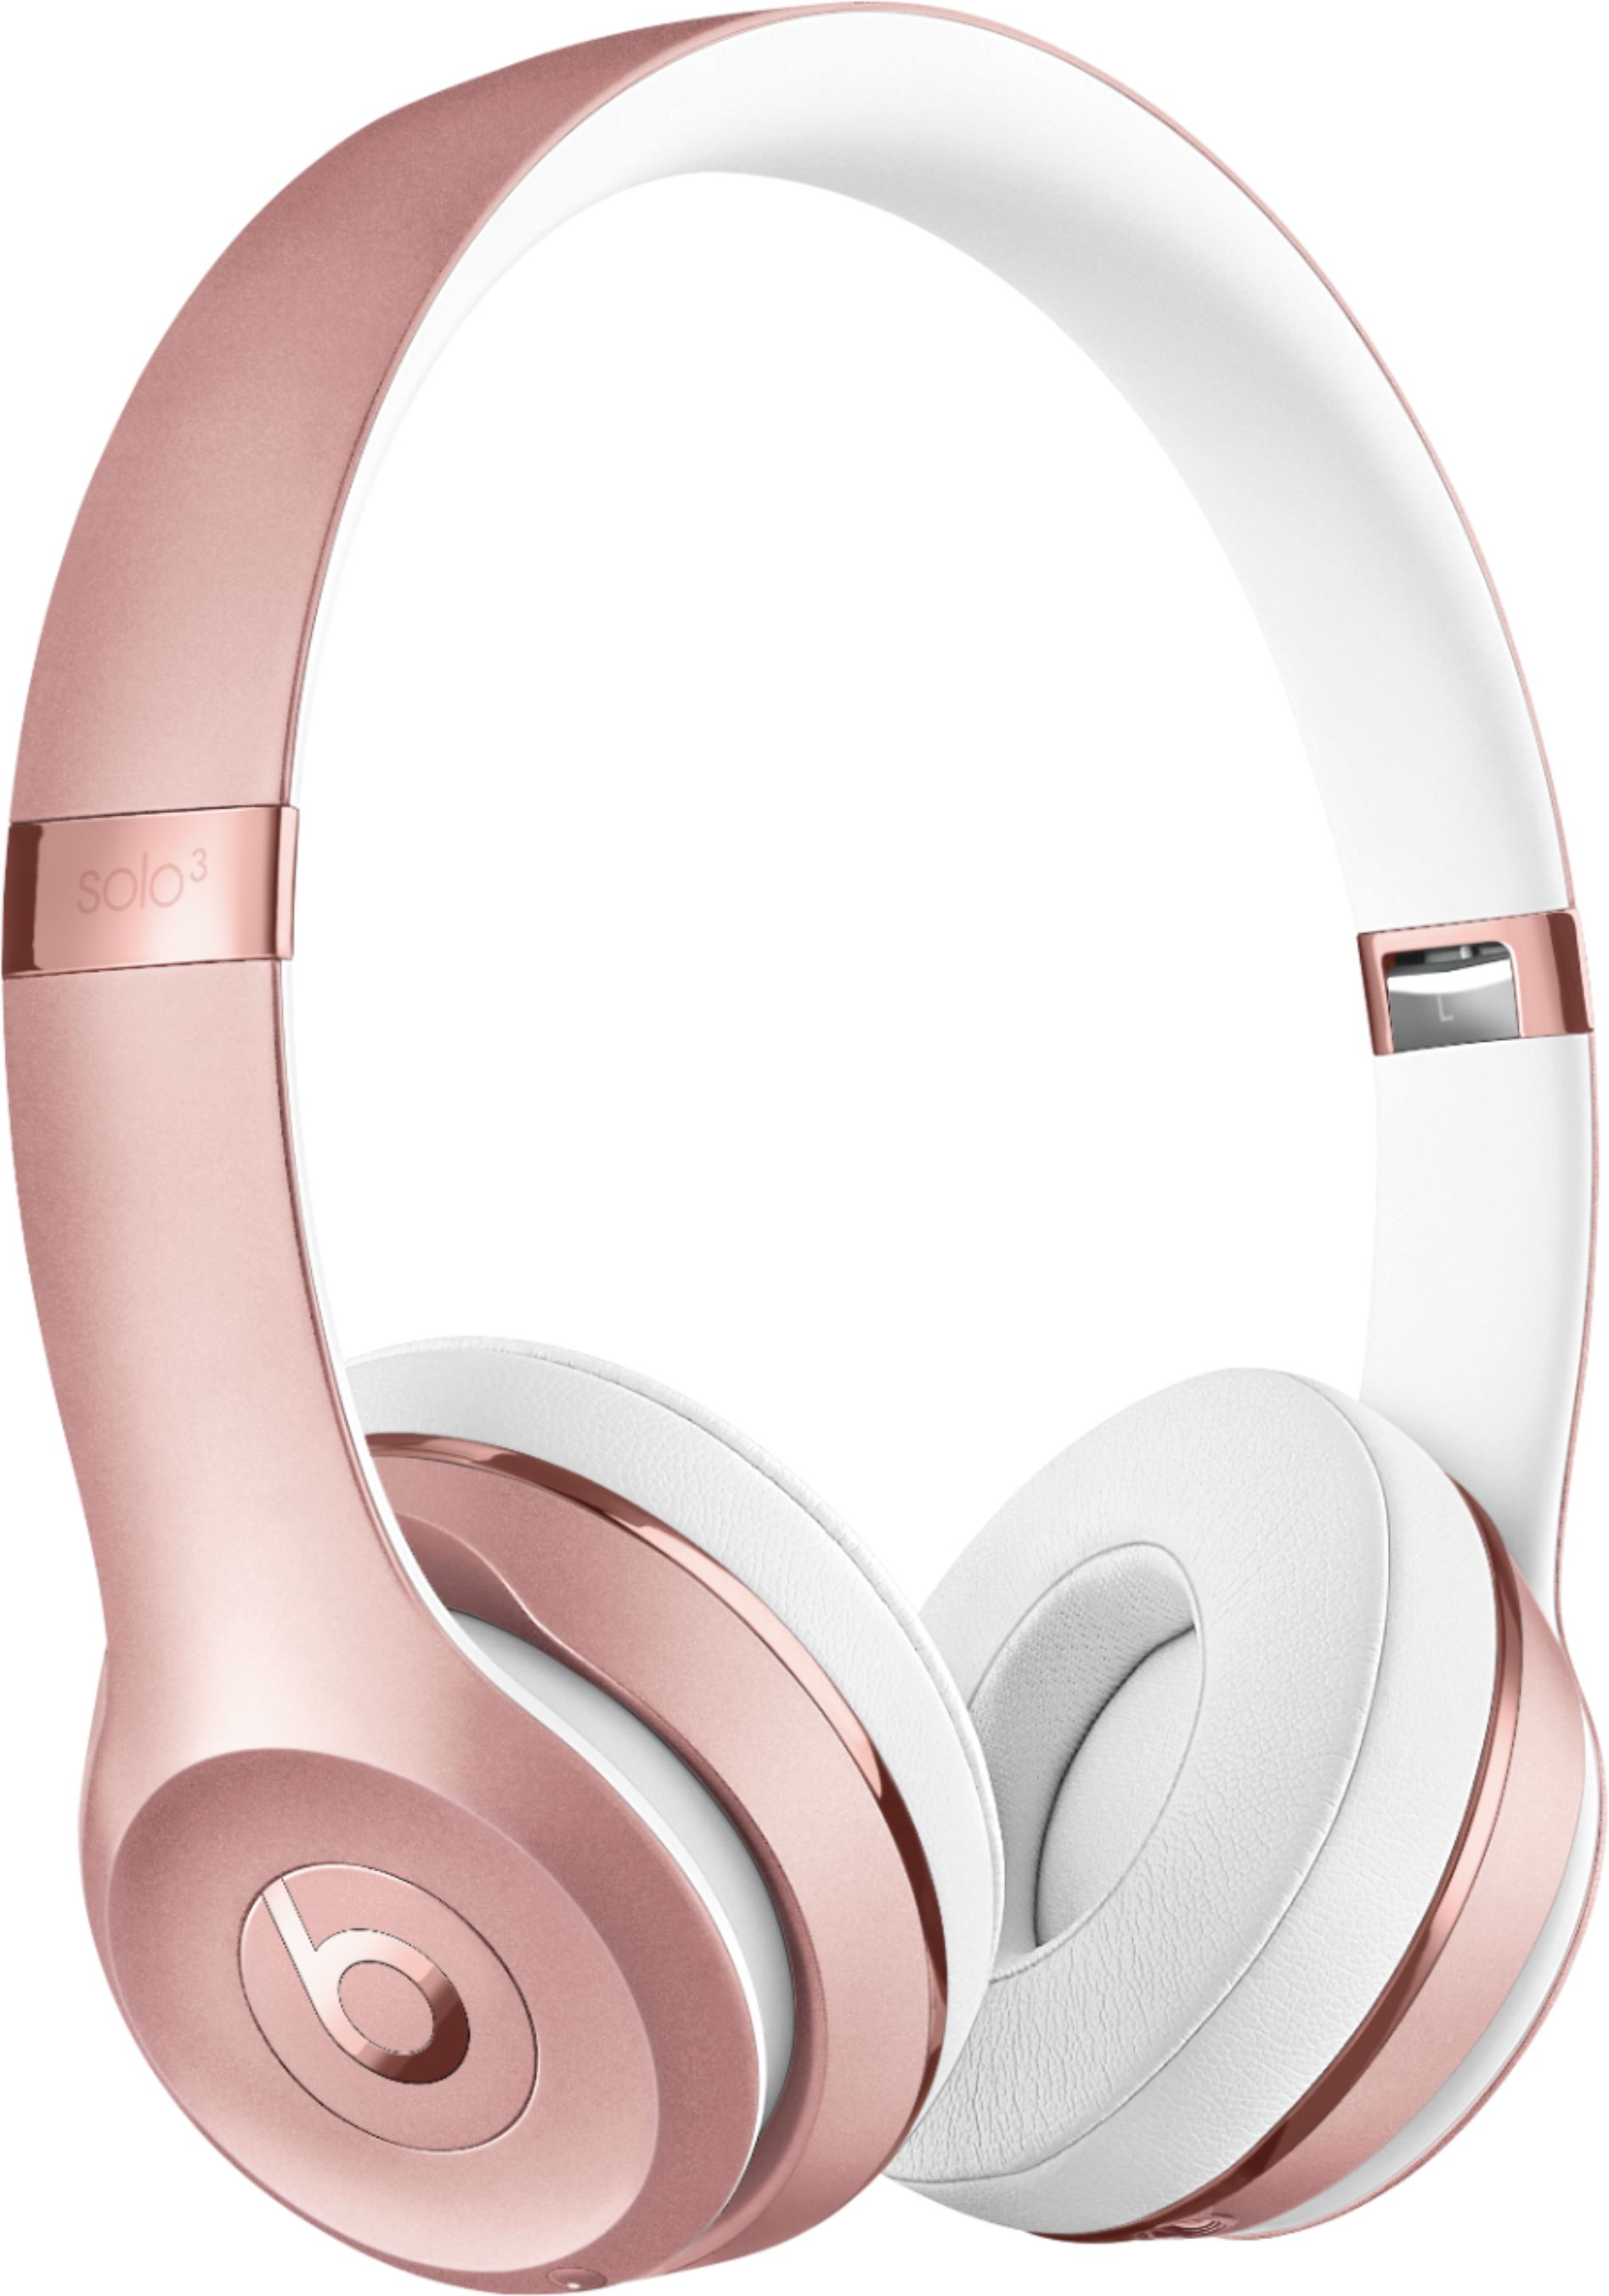 Beats by Dr. Dre Solo³ Wireless On-Ear Headphones Rose Gold MX442LL/A - Best